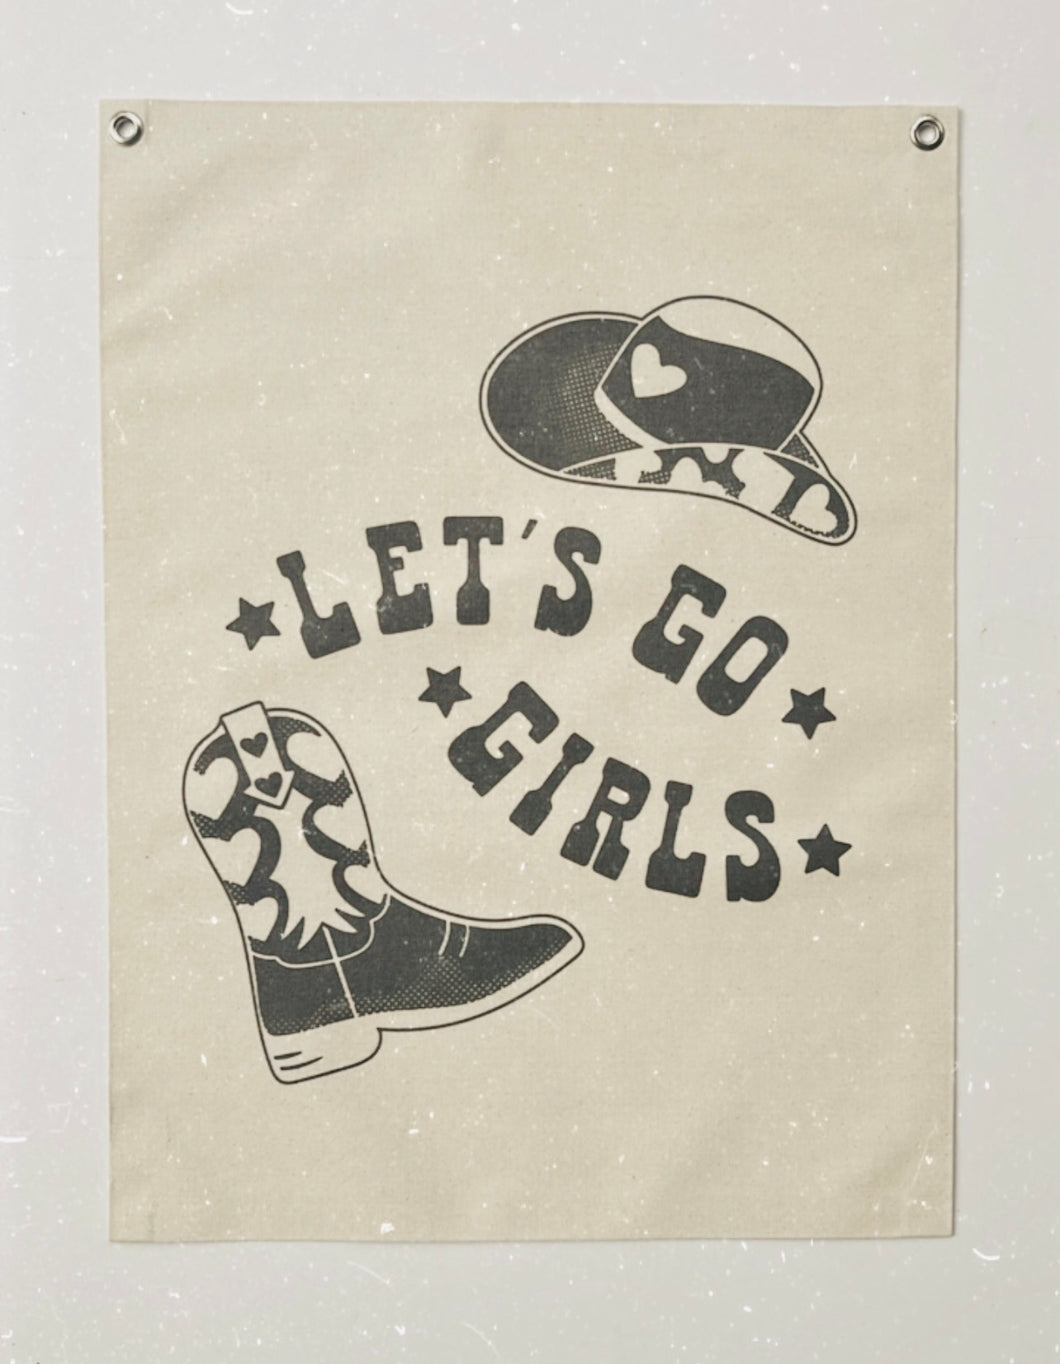 Let’s go girls- canvas banner